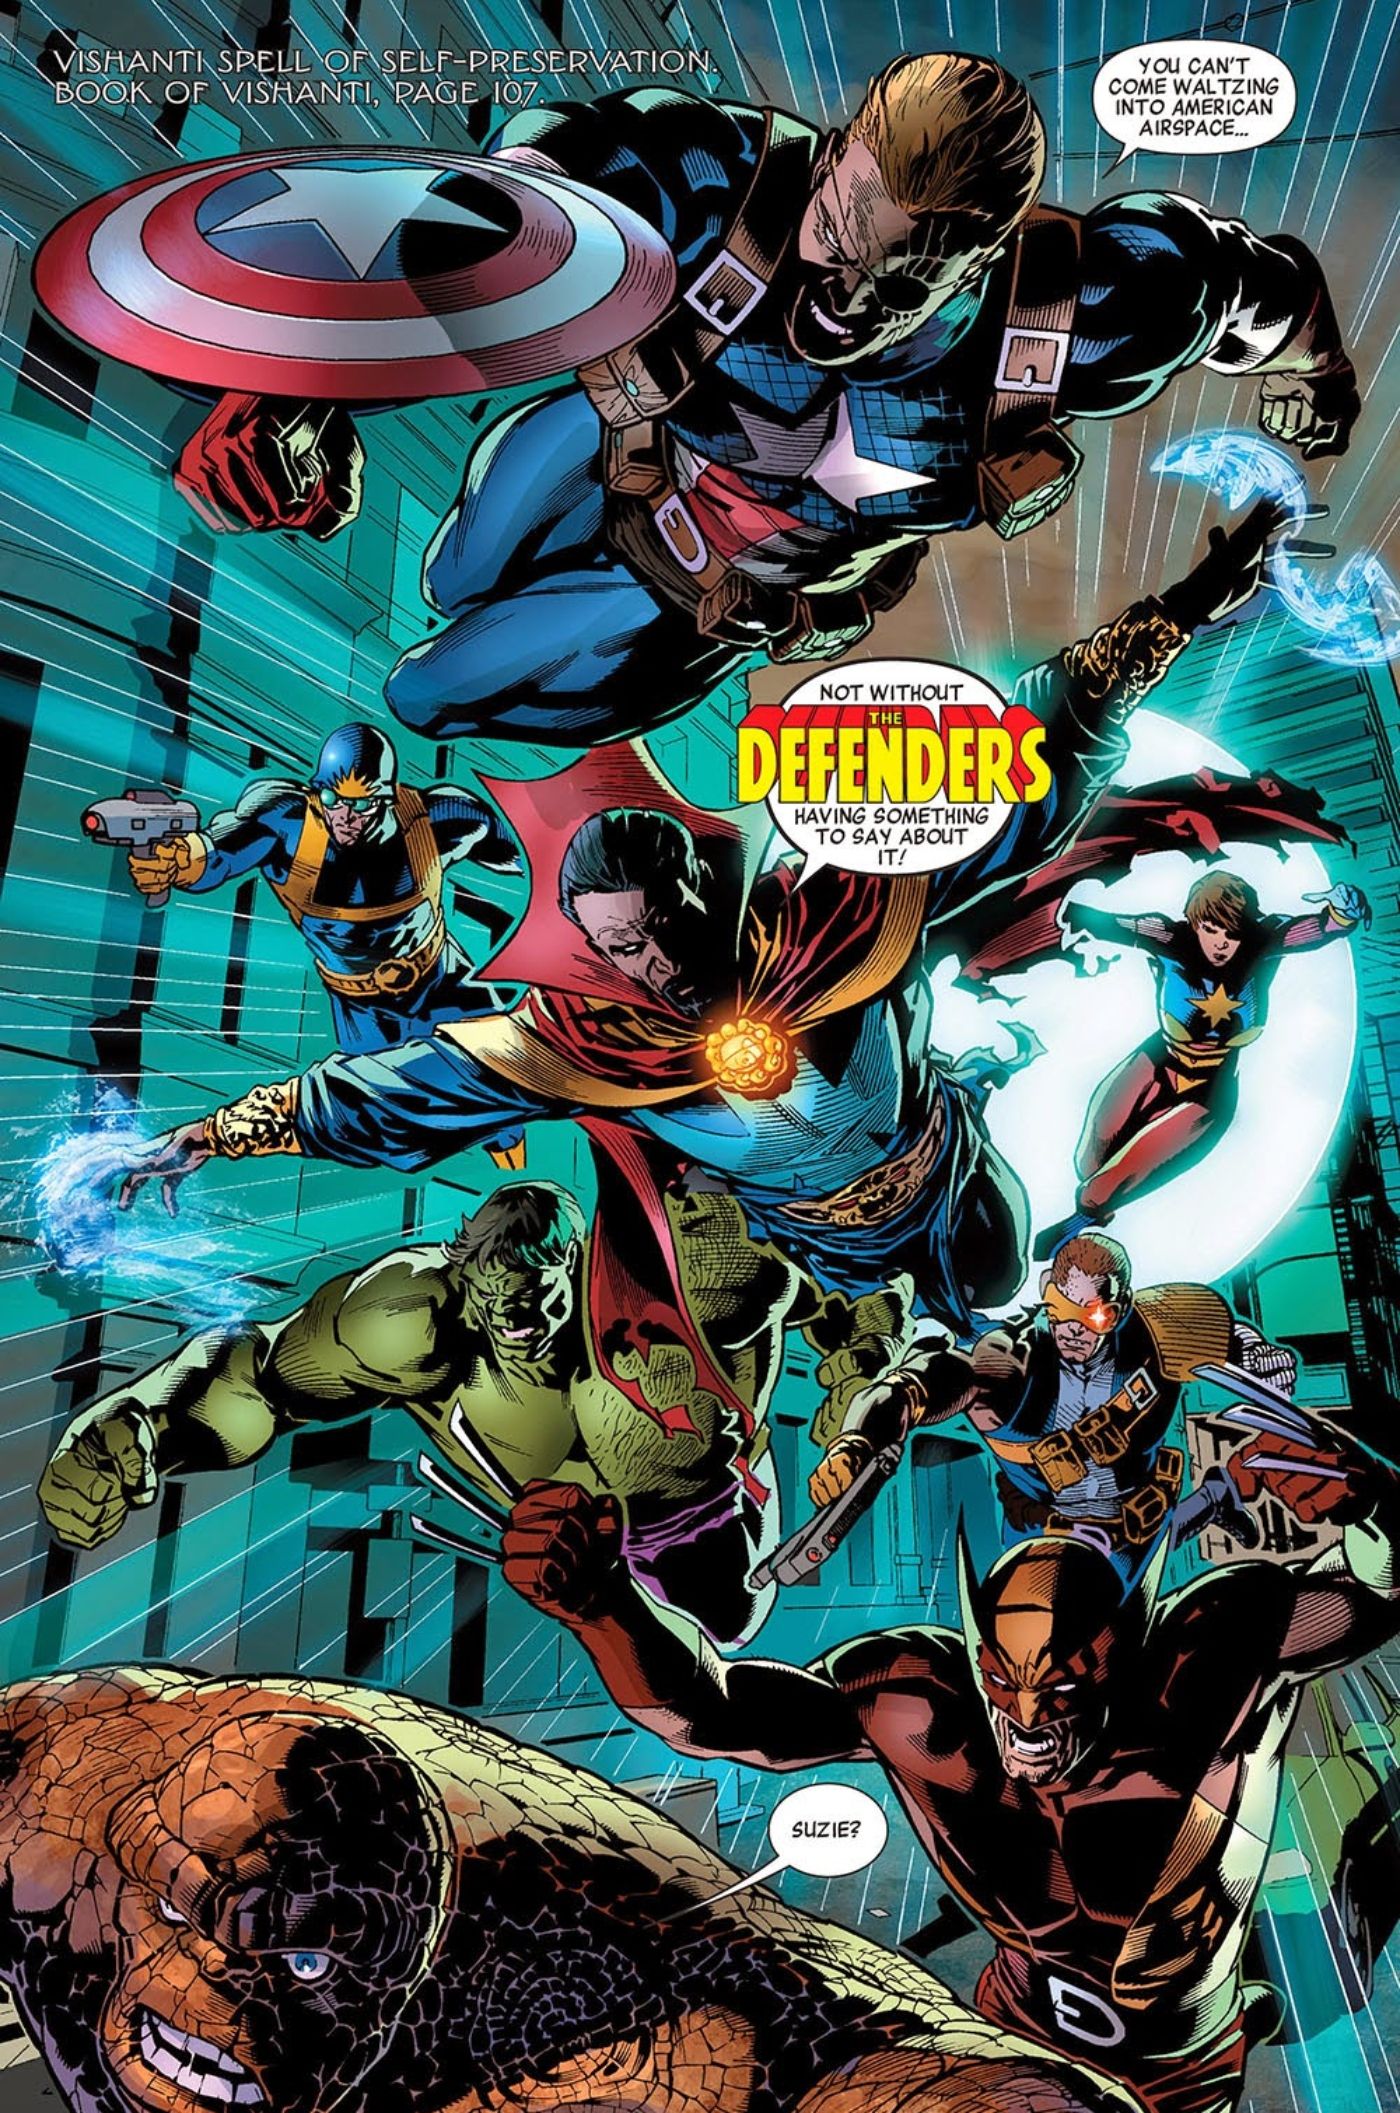 Captain America’s Defenders Team Make the Avengers Look C-List